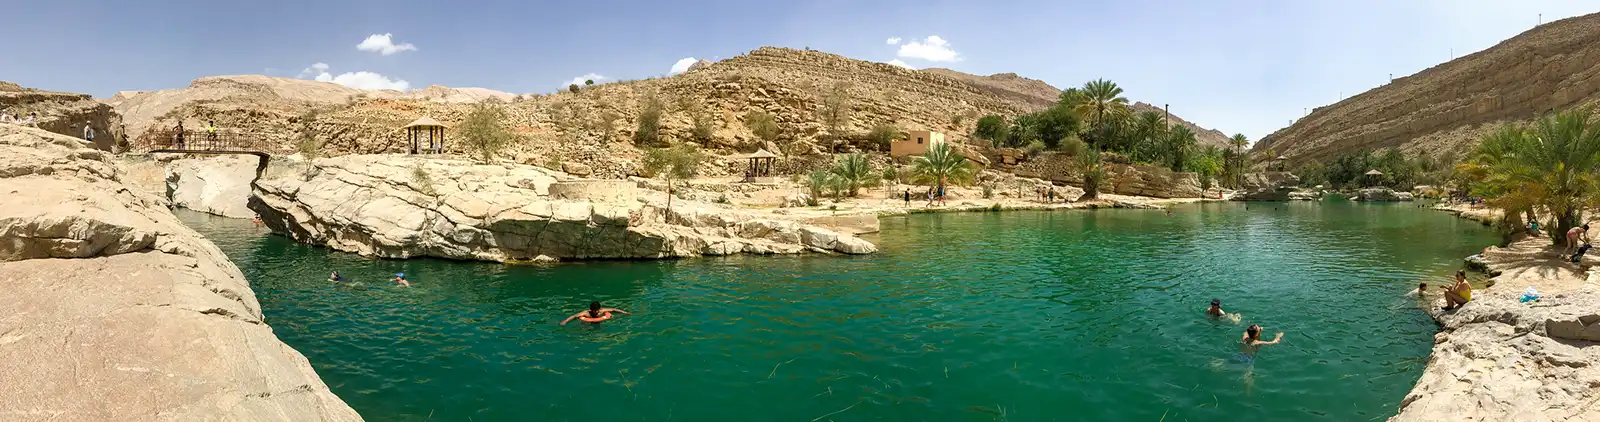 Wadi Bani Khalid Panorama